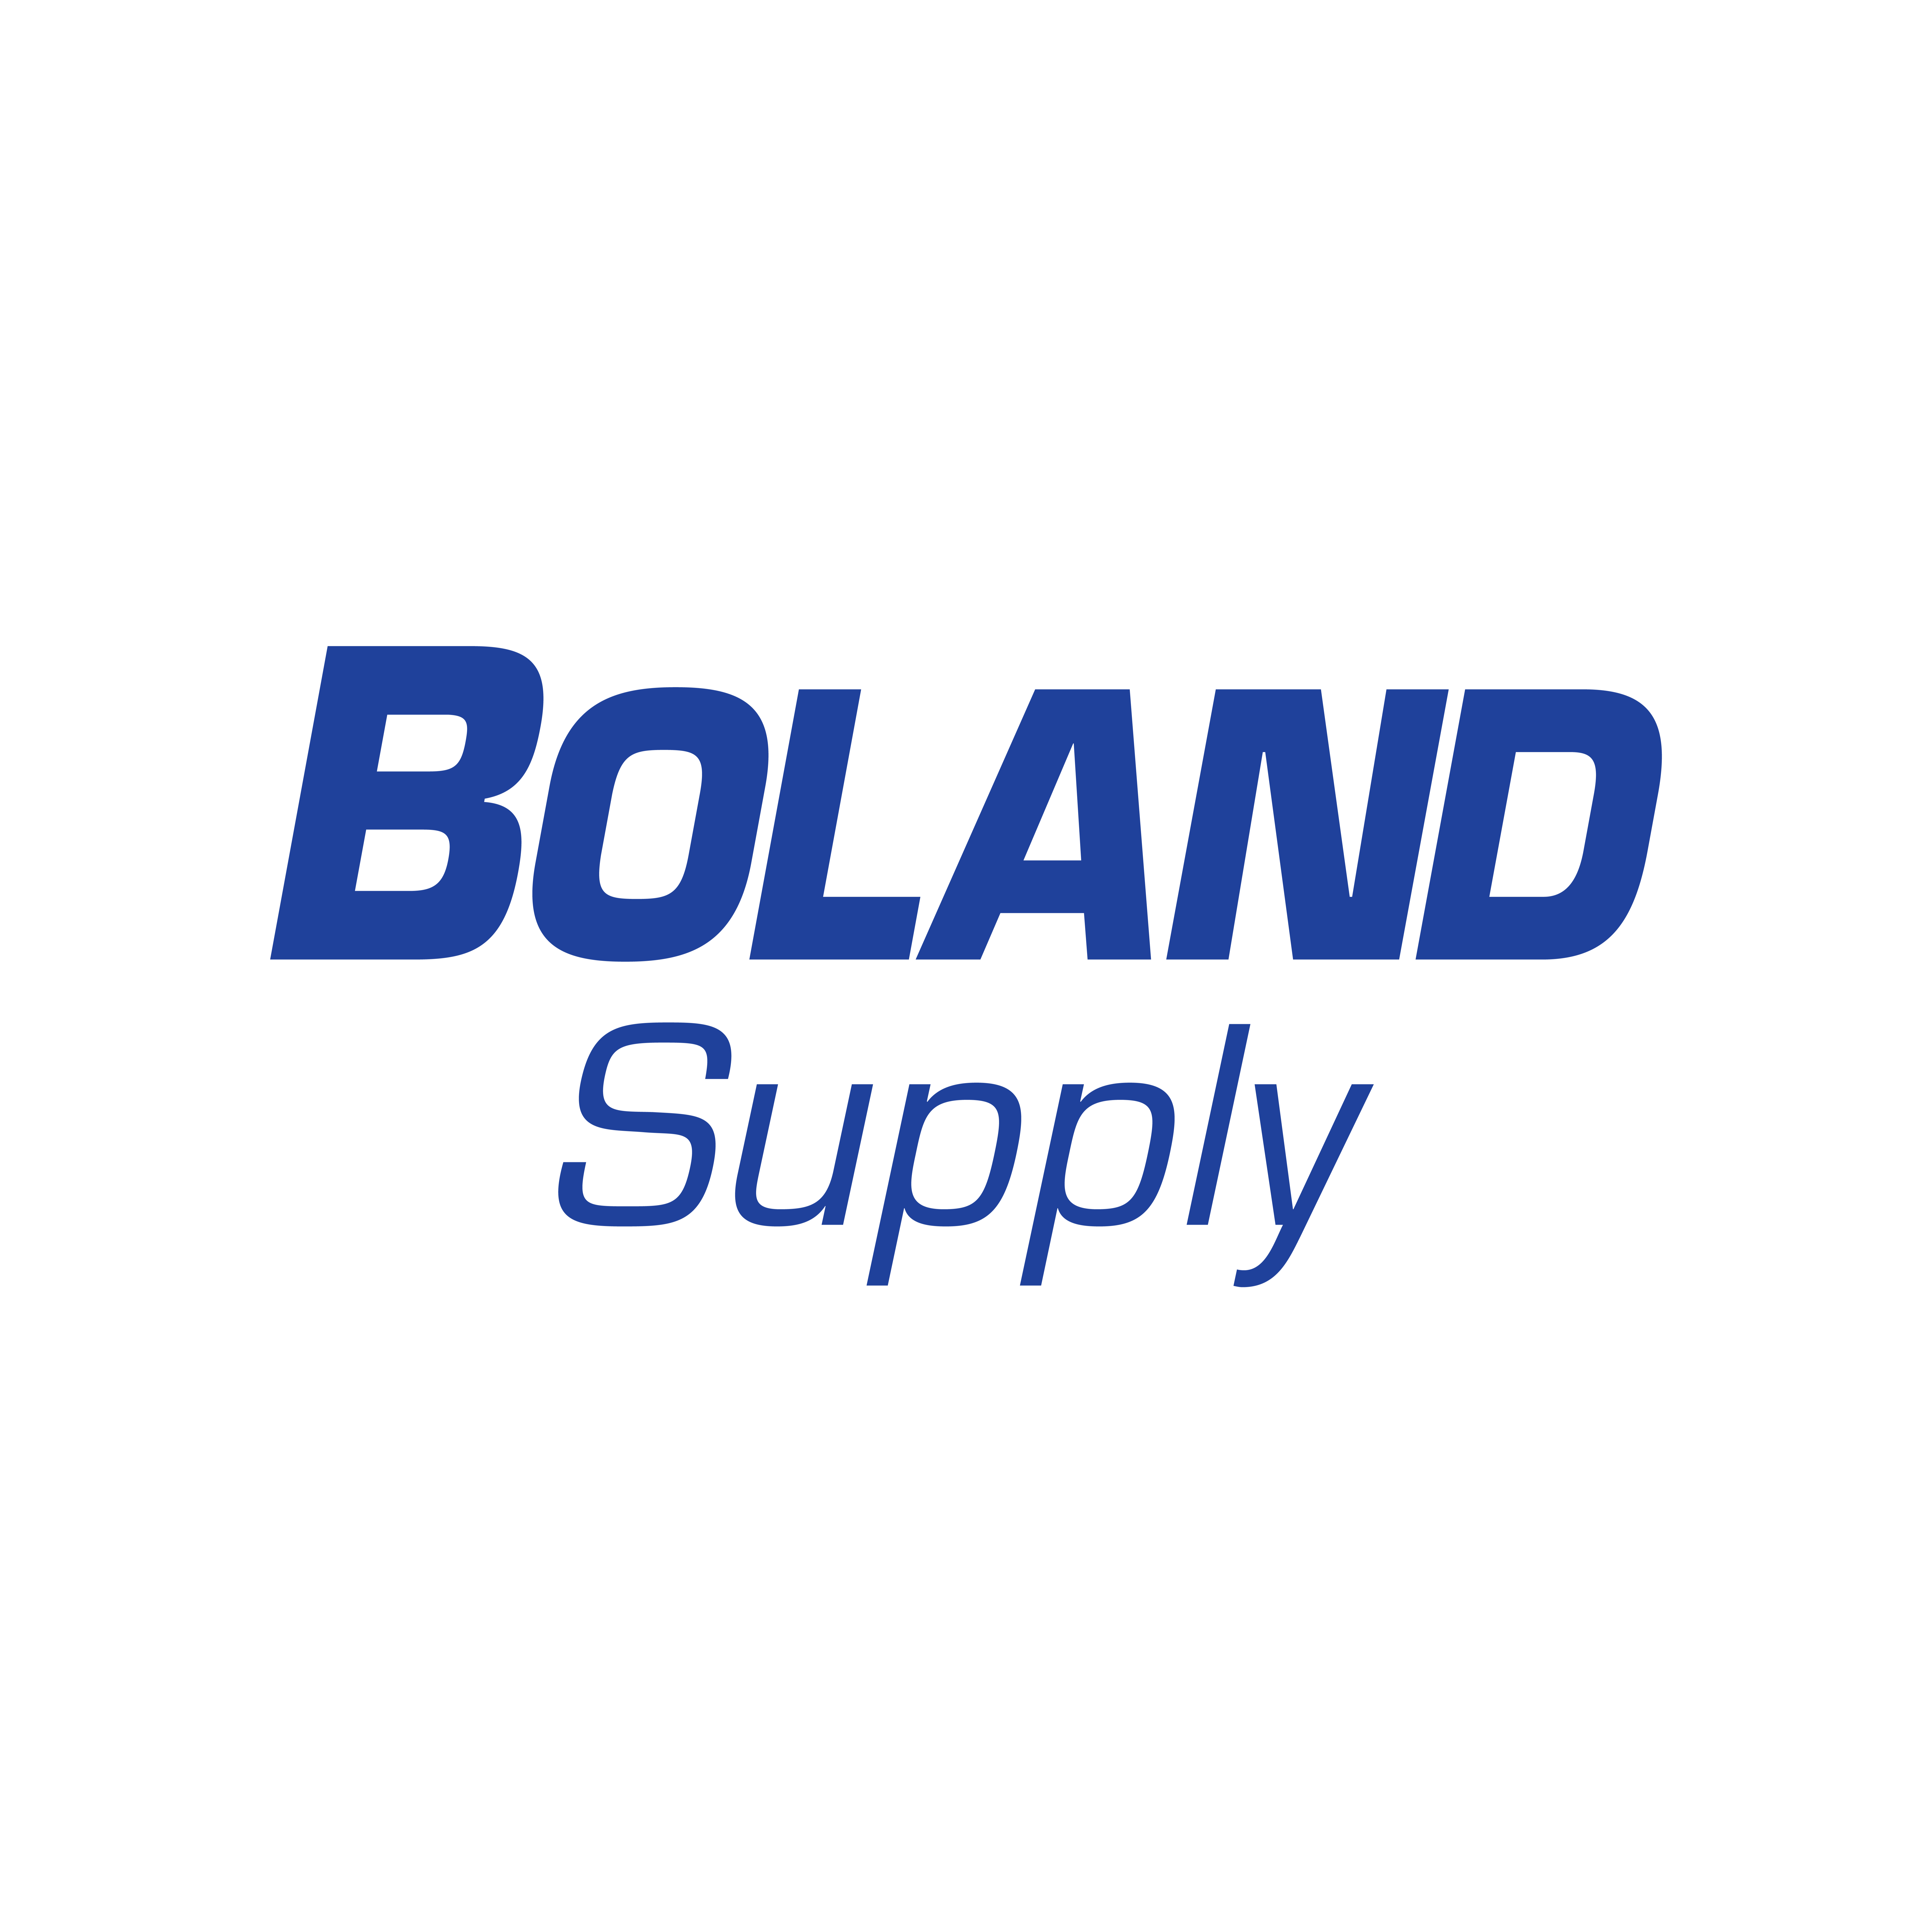 Boland Supply